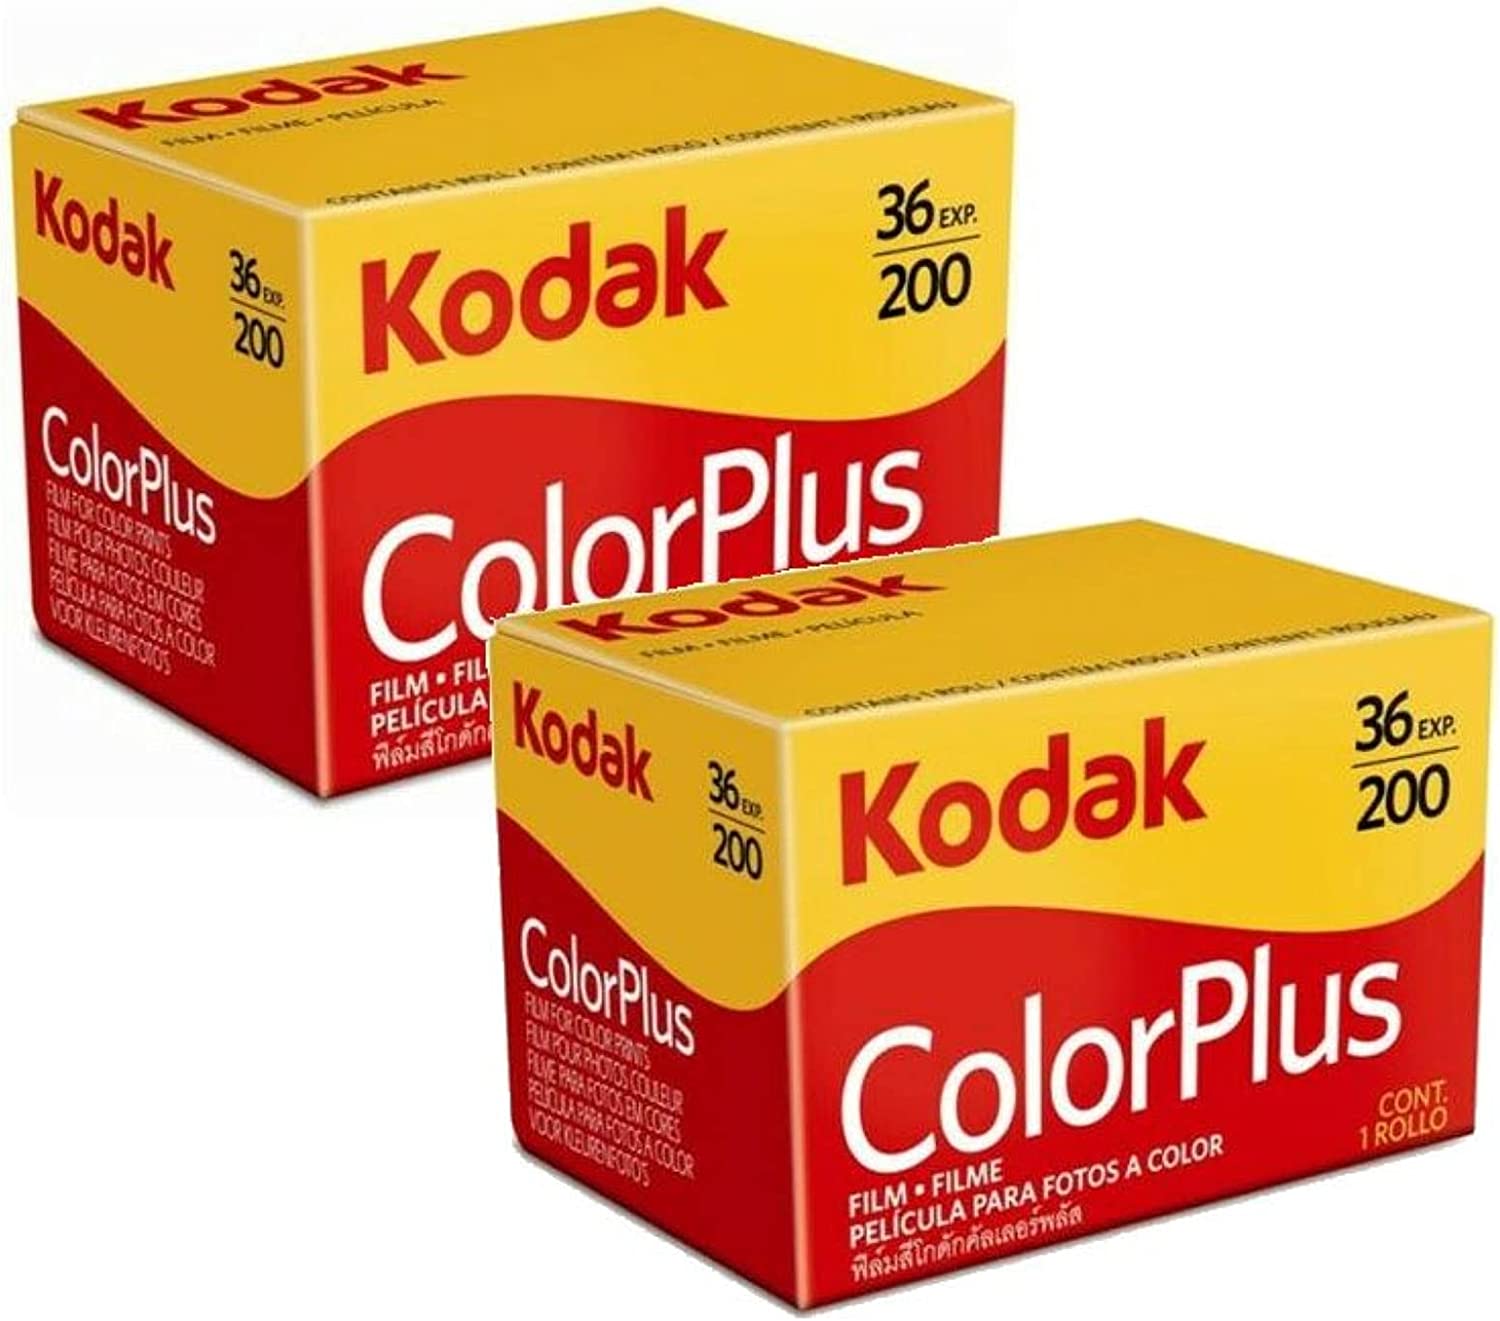 Kodak Color Plus 200 35mm Film - 36 exp